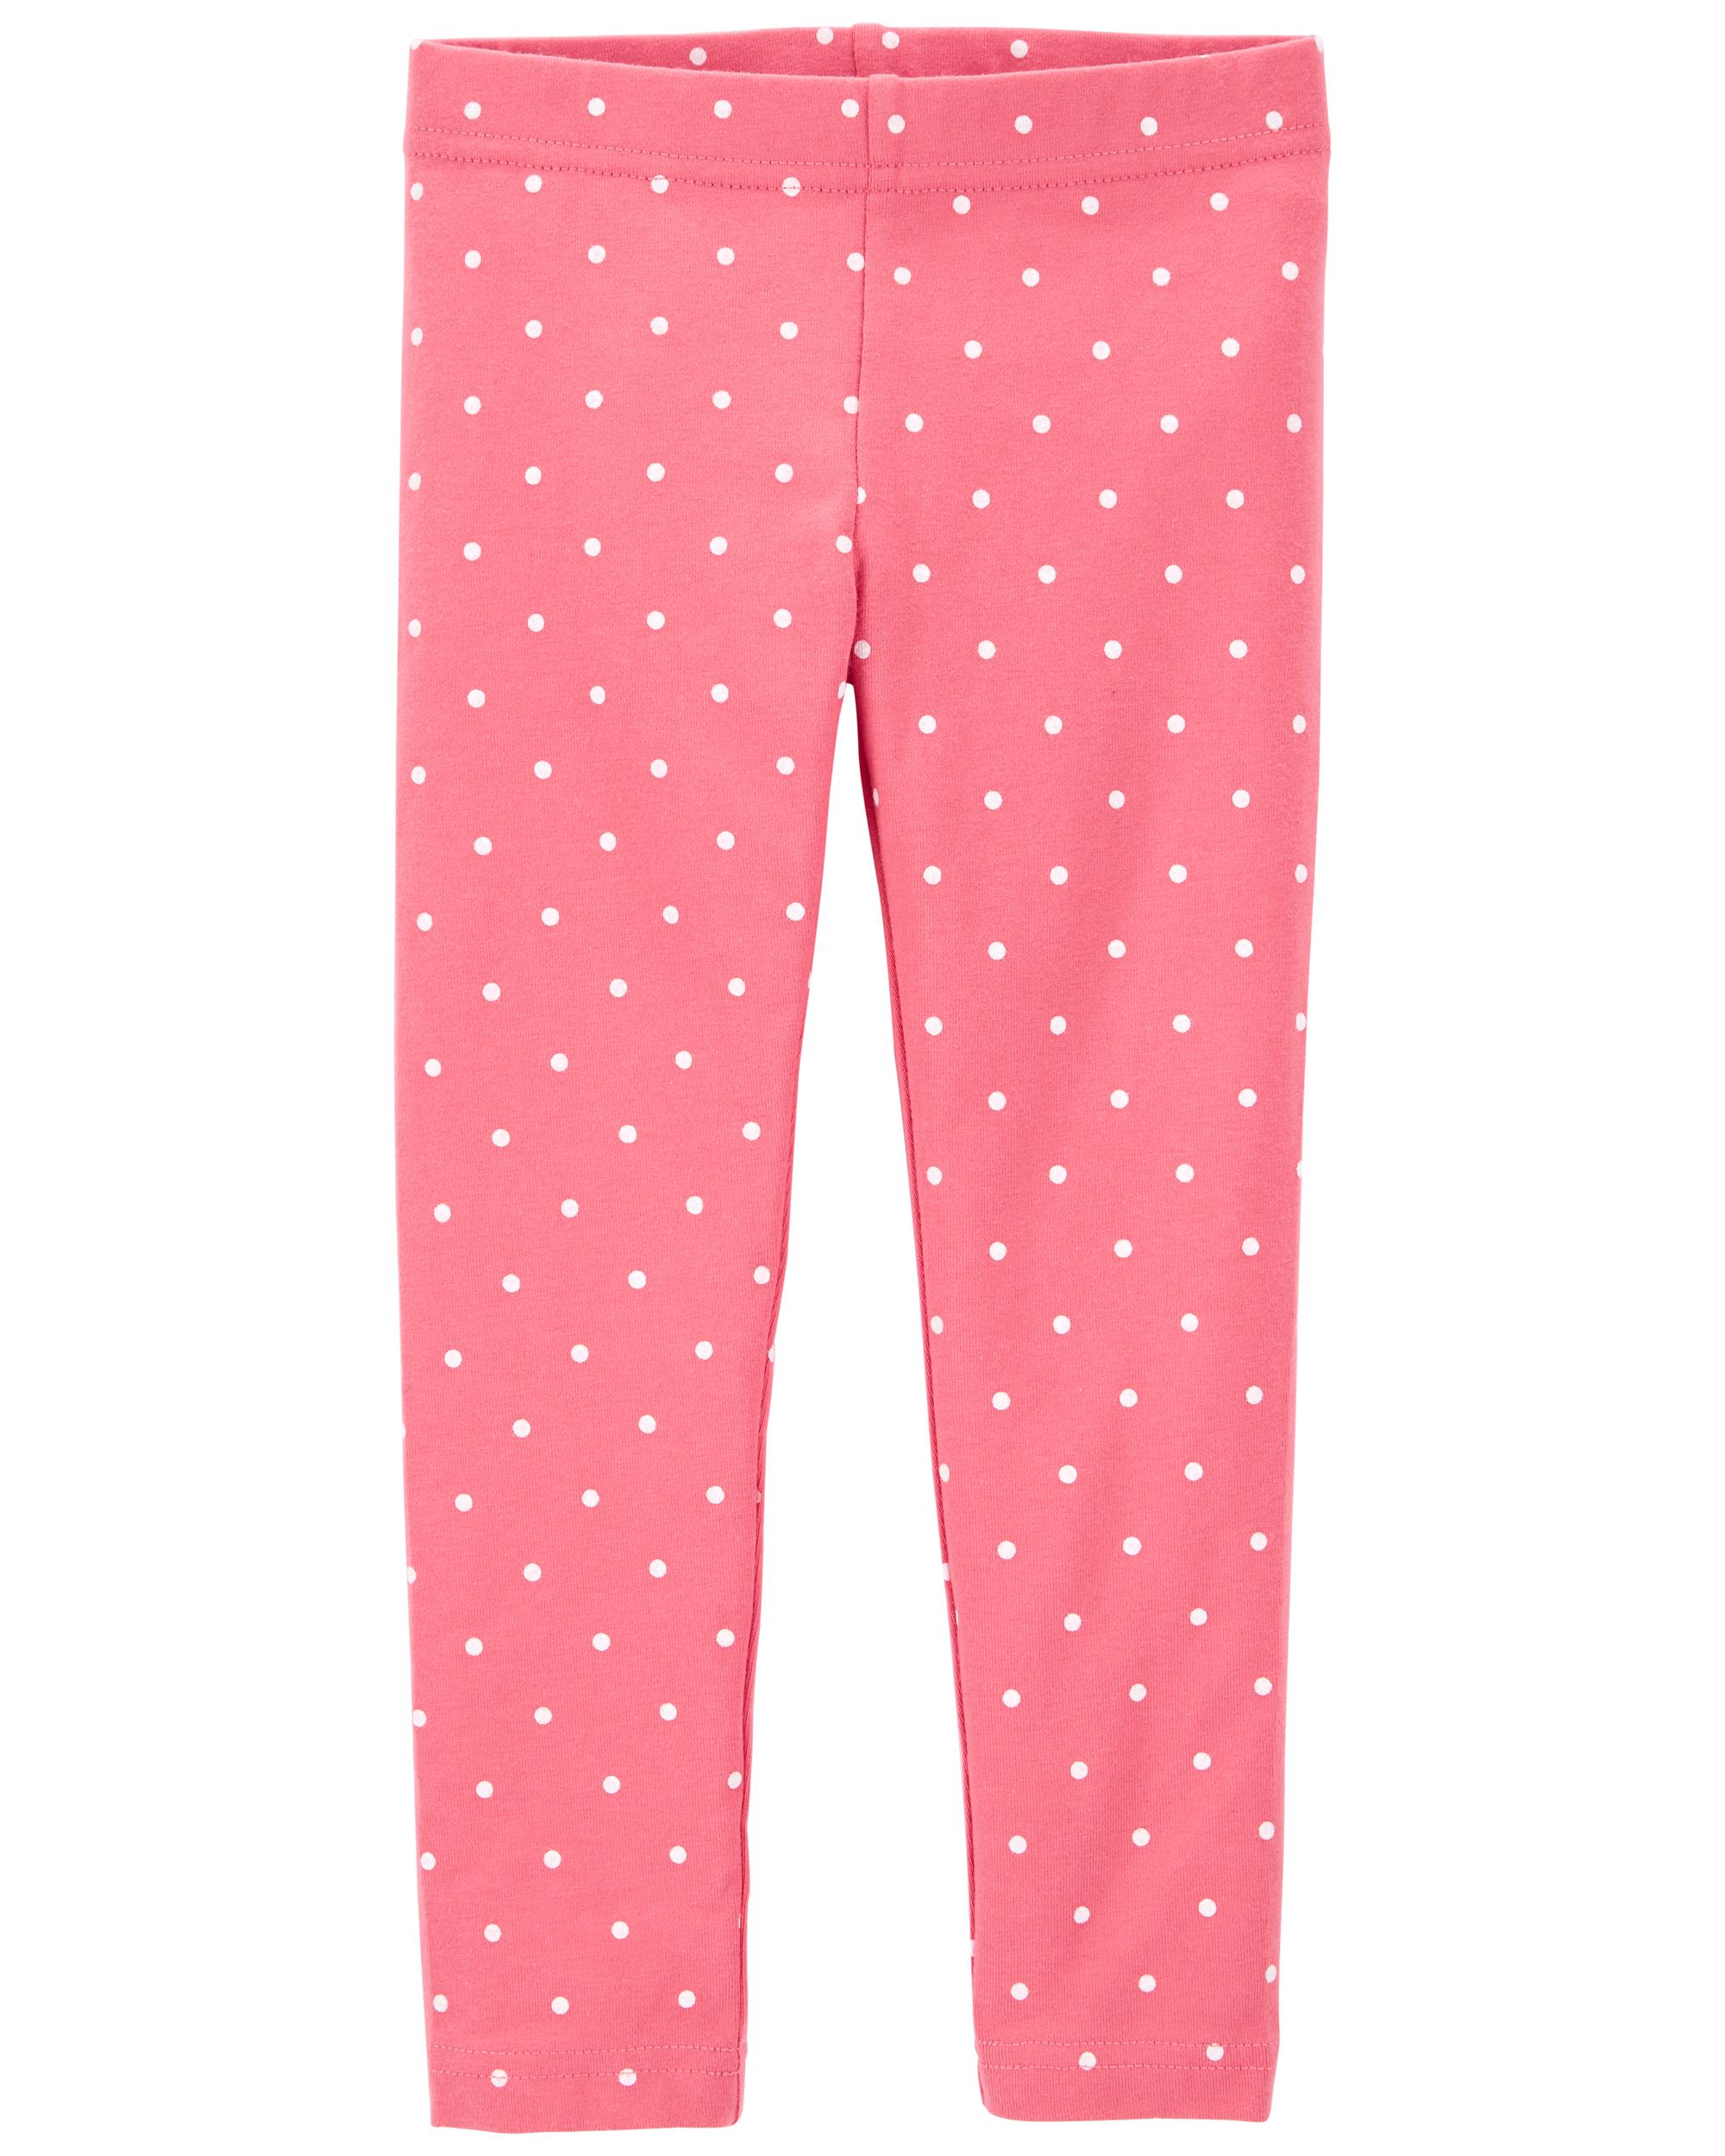 Lularoe Kids Sm-Med S/M Valentines Plaid Criss Cross Stripe Red Pink Kids  Leggings fits Kids Sizes 2-6 1416-A